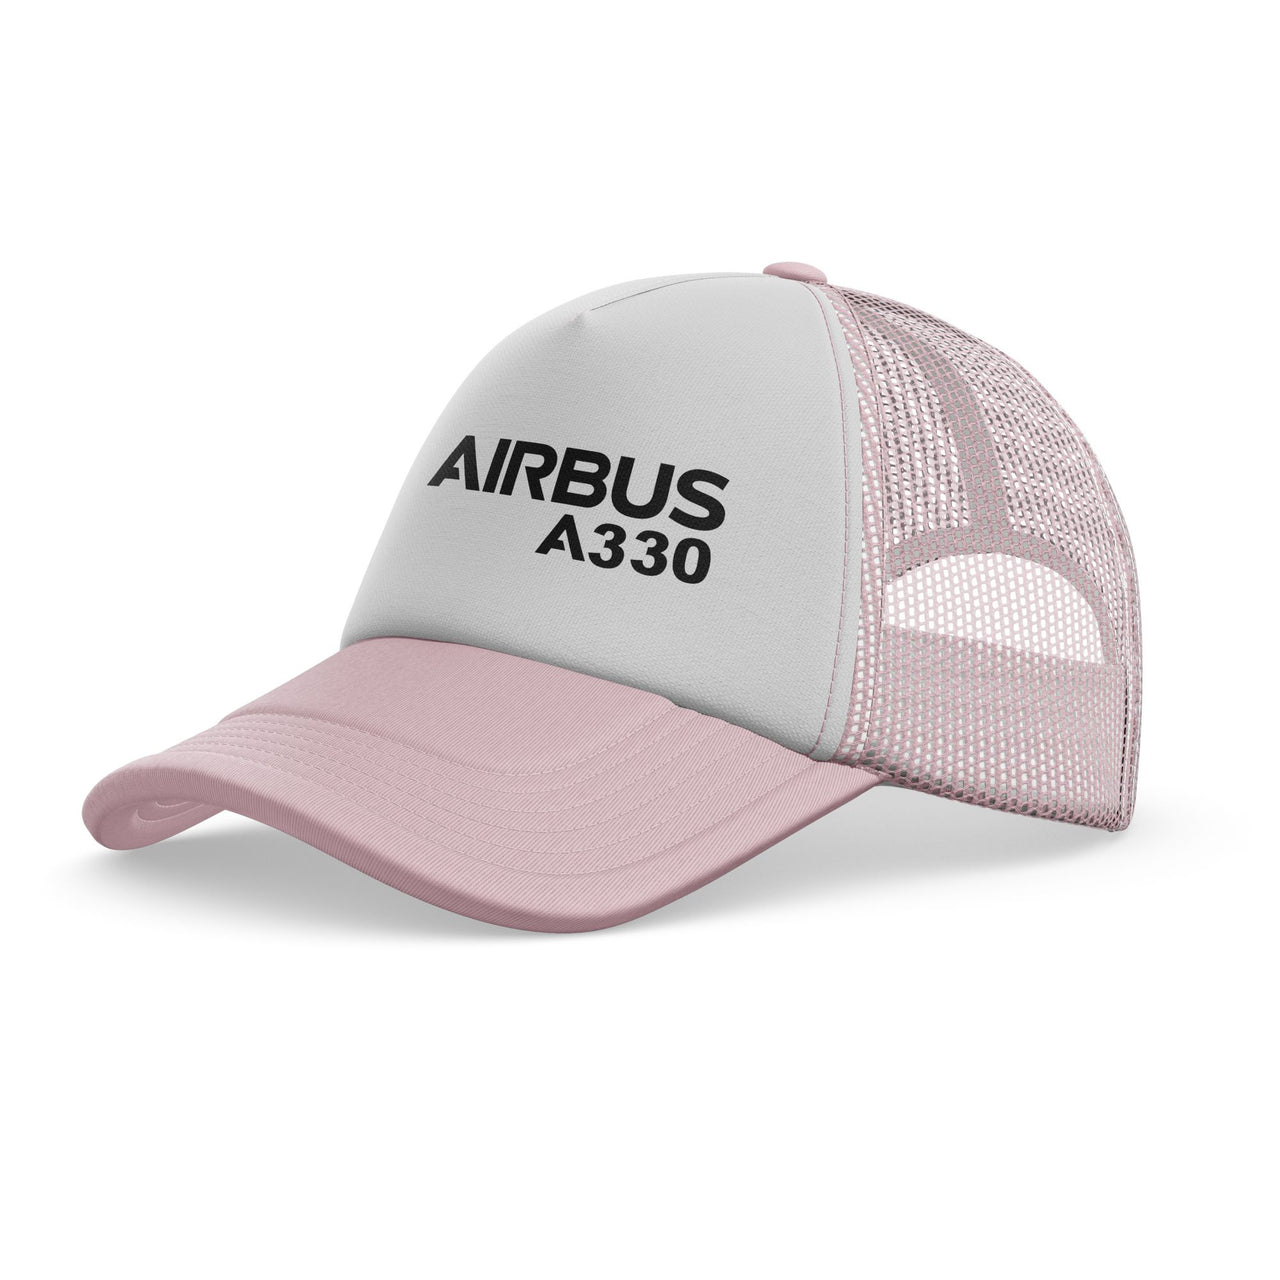 Airbus A330 & Text Designed Trucker Caps & Hats